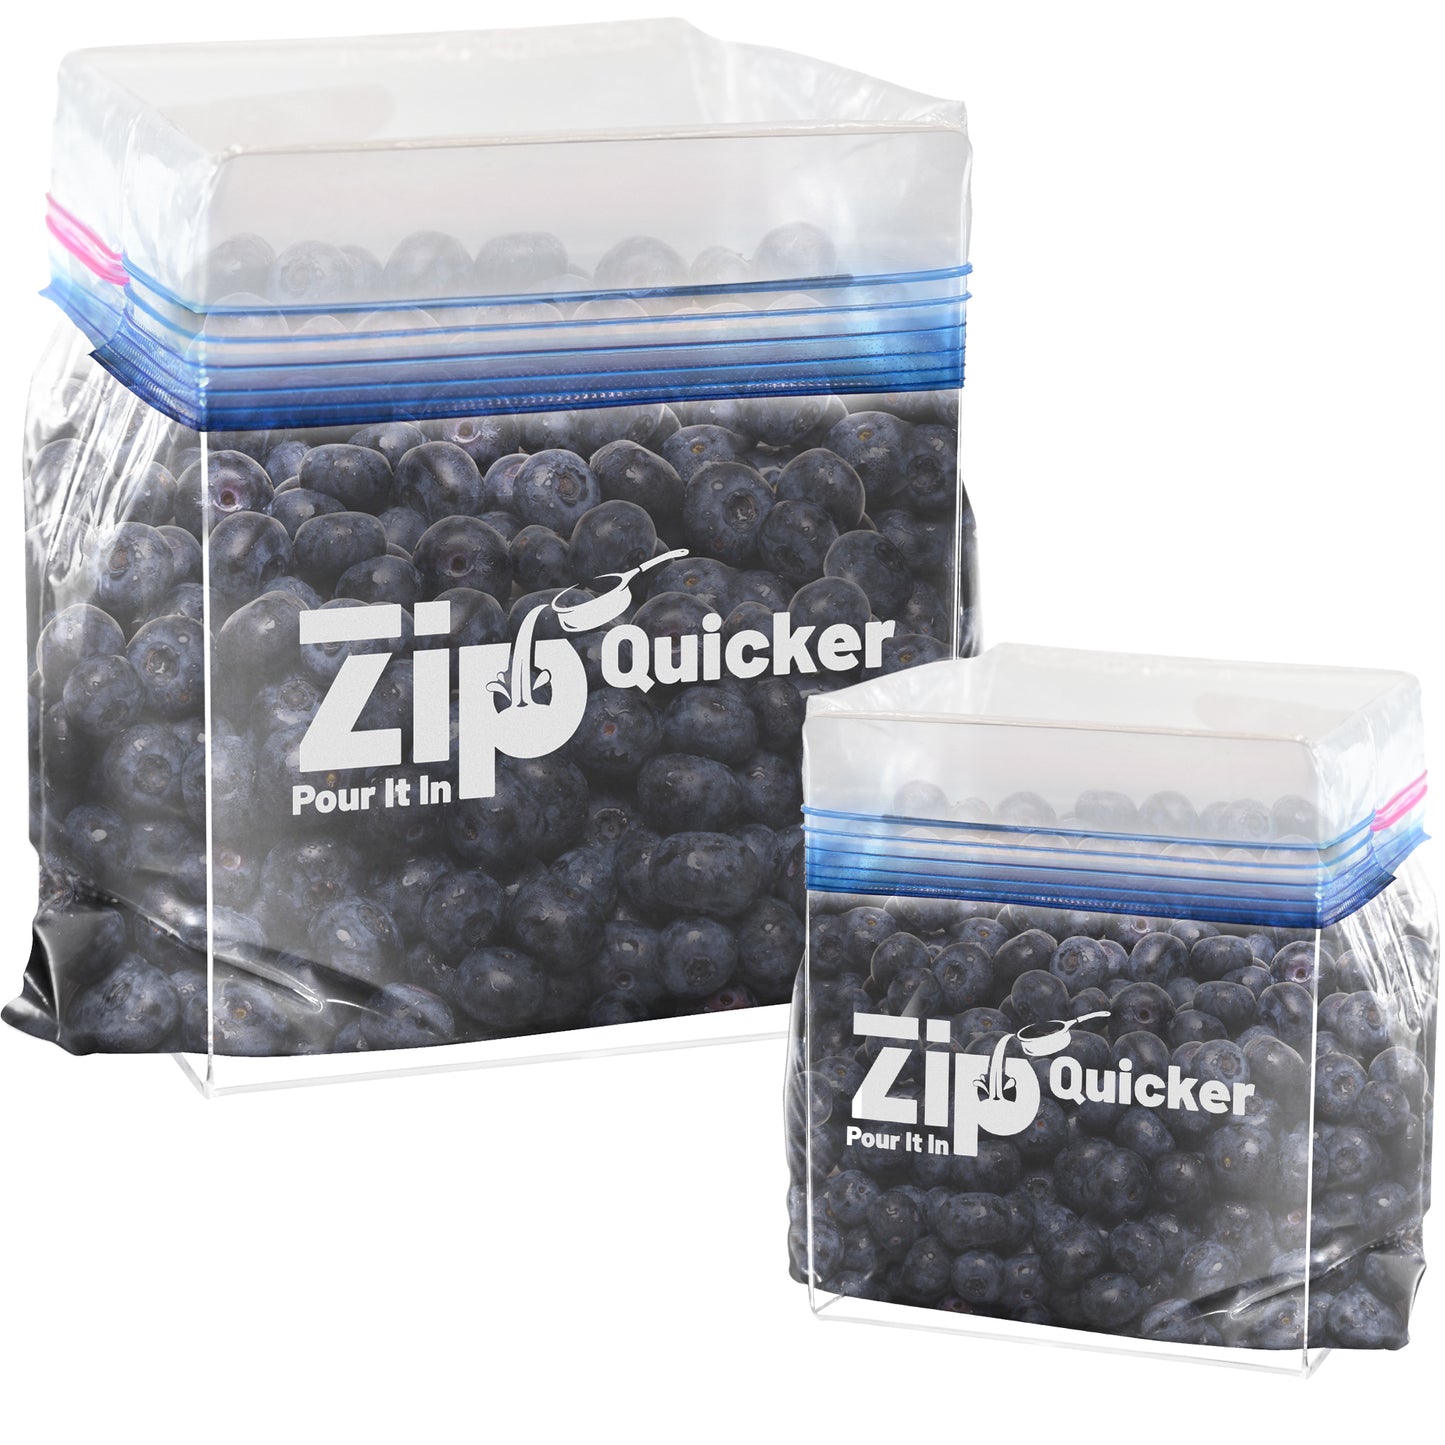 Zip Quicker - Comes as a set for Gallon & Quart sizes